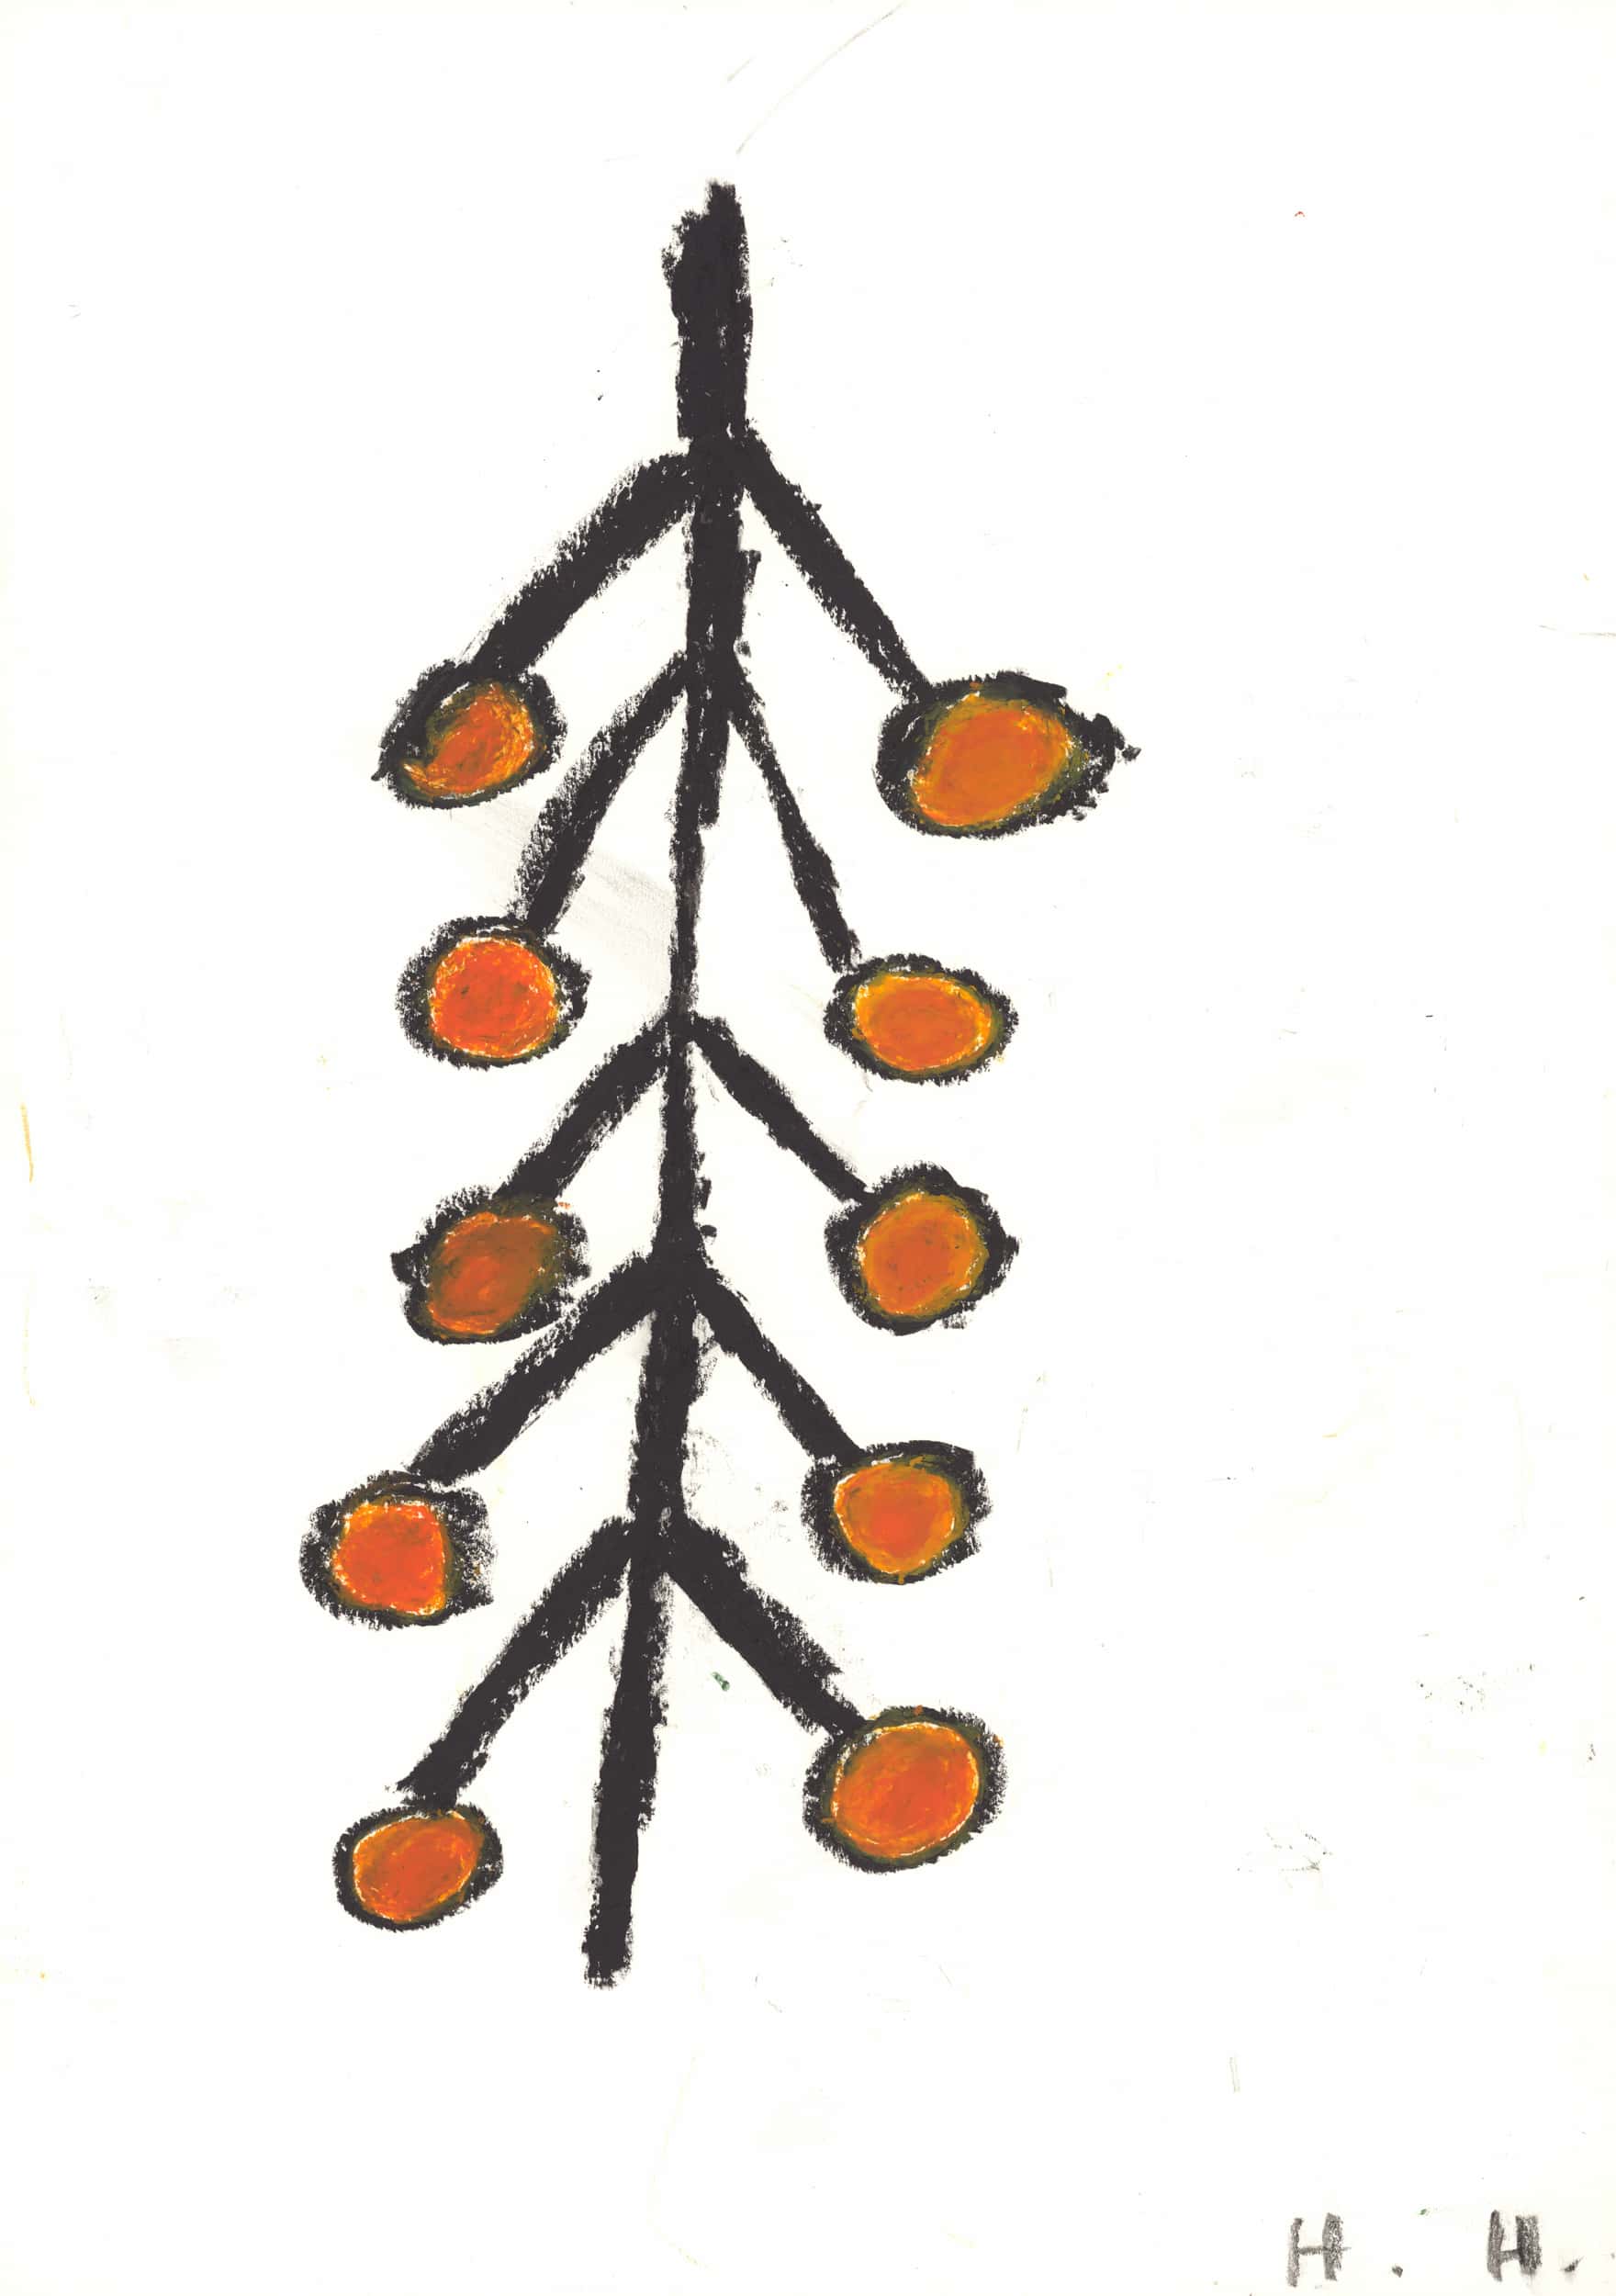 hladisch helmut - Marillenbaum / Apricot tree